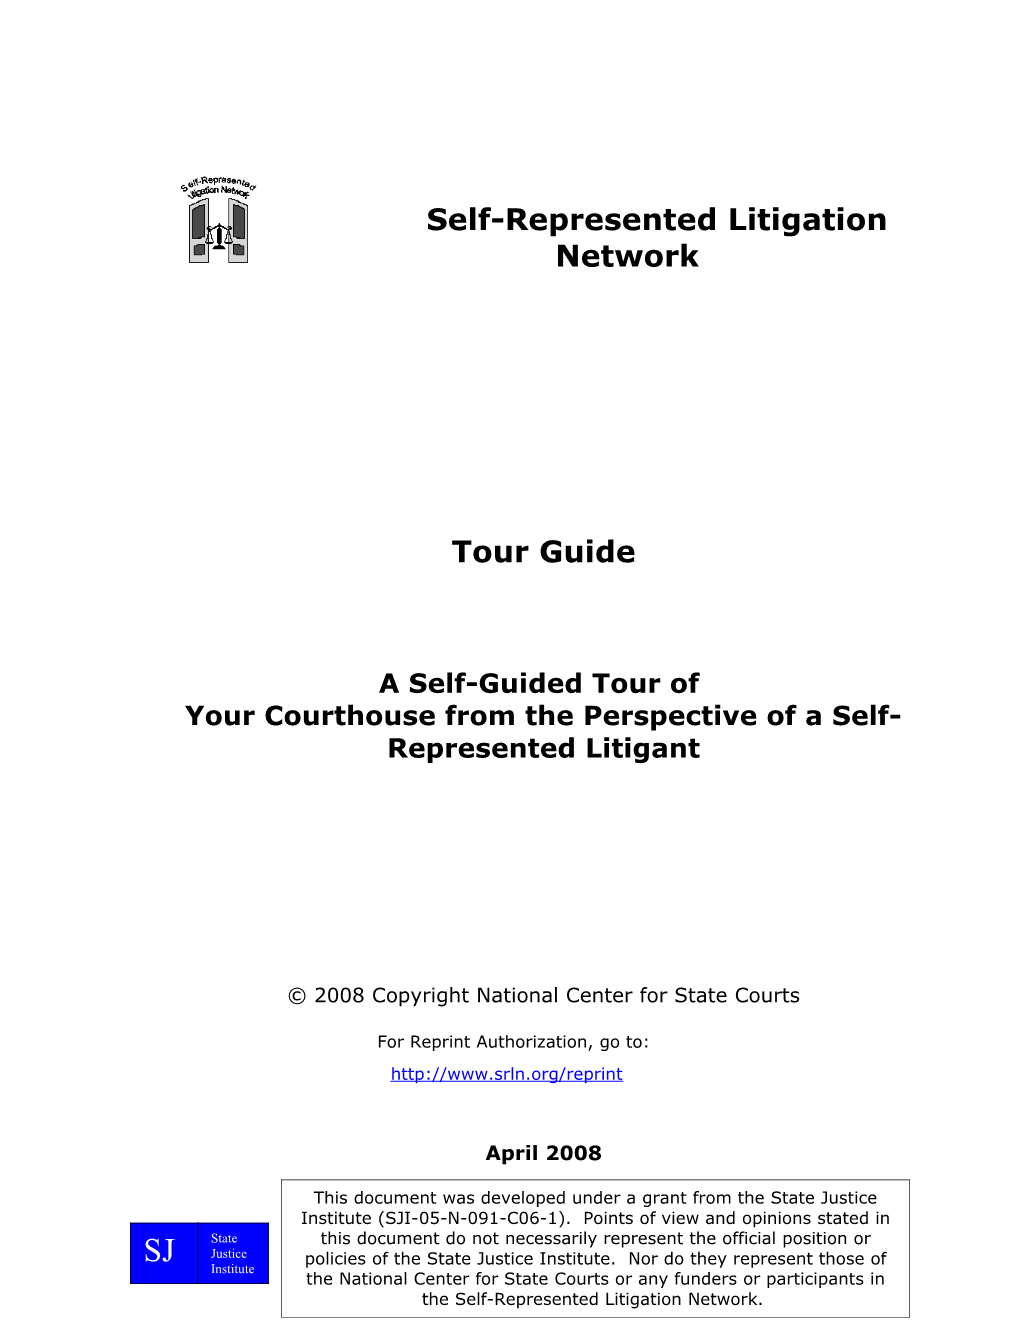 Self-Represented Litigation Network s1